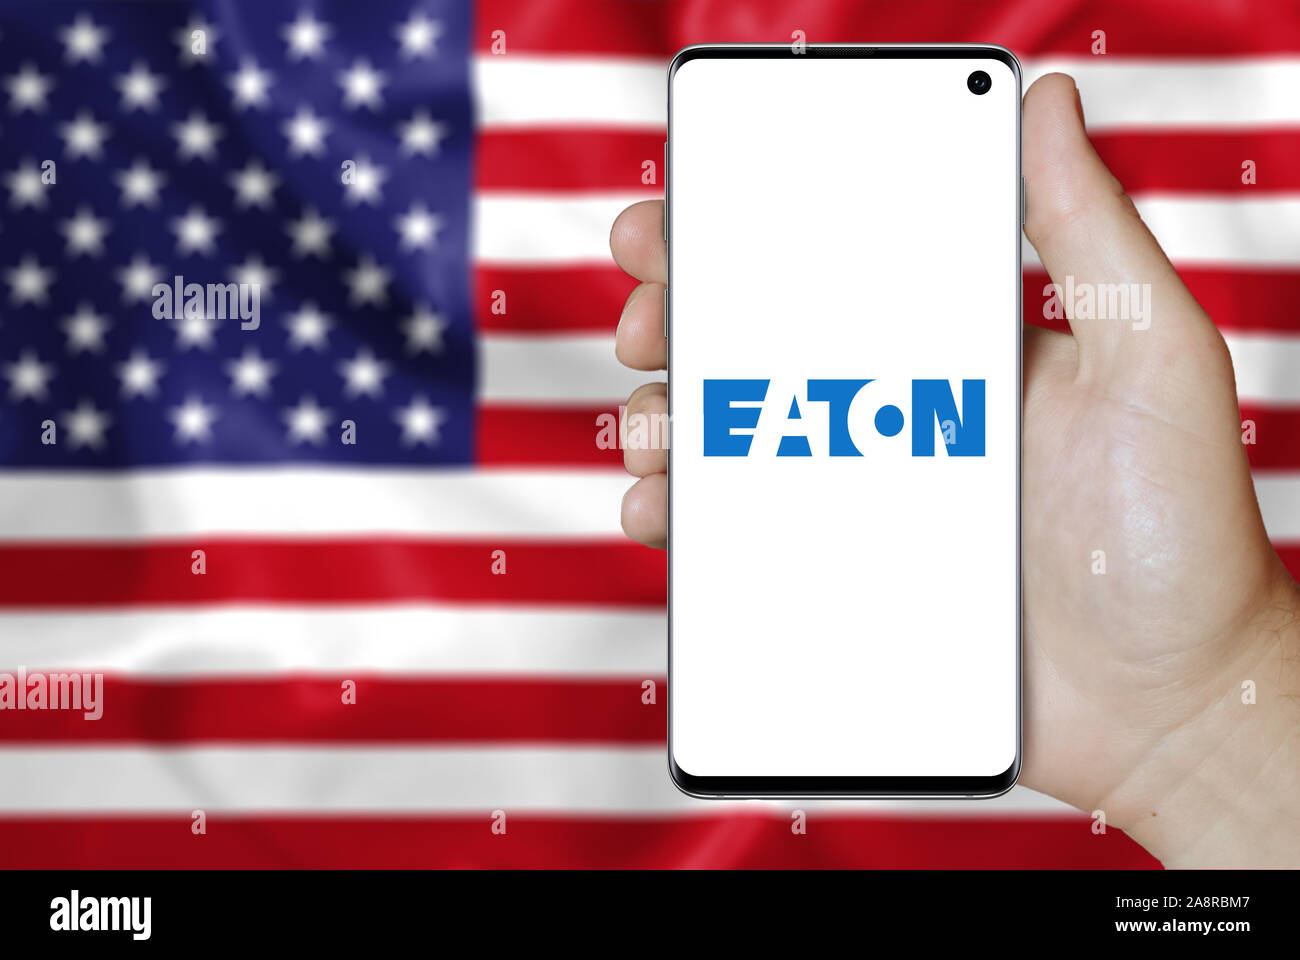 Logo of public company Eaton Corporation displayed on a smartphone. Flag of USA background. Credit: PIXDUCE Stock Photo